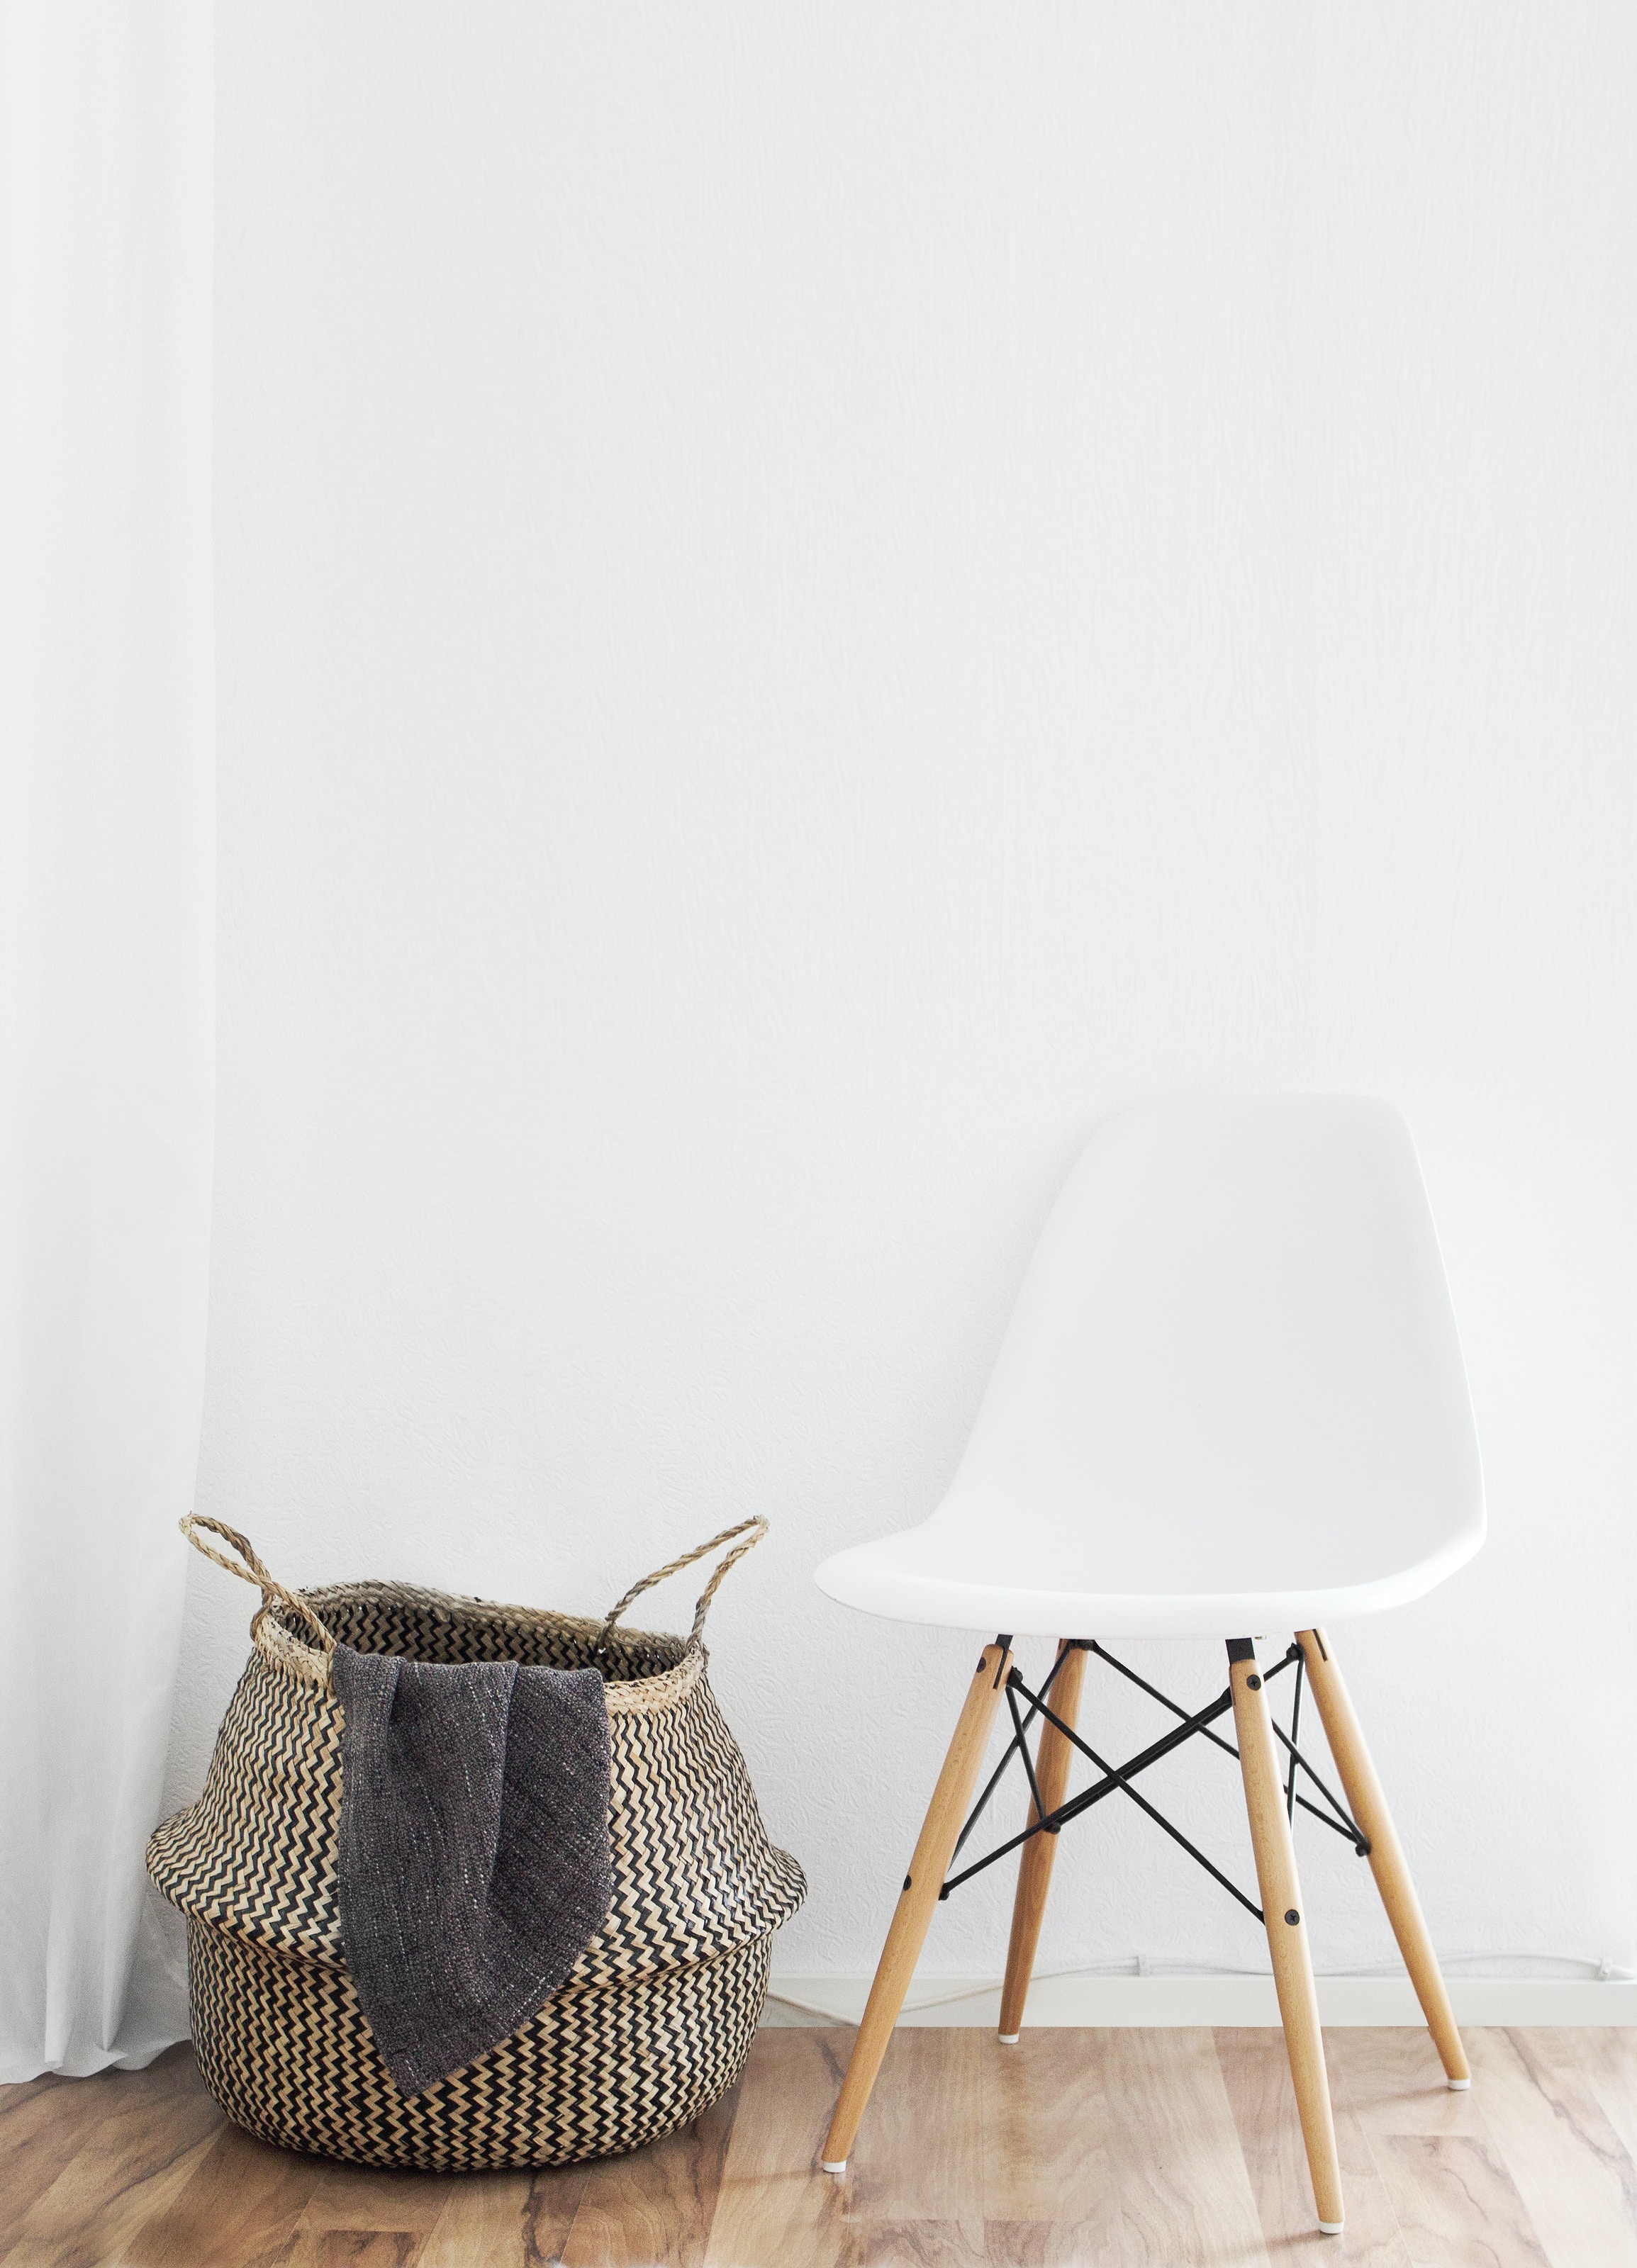 A woven basket next to a white chair